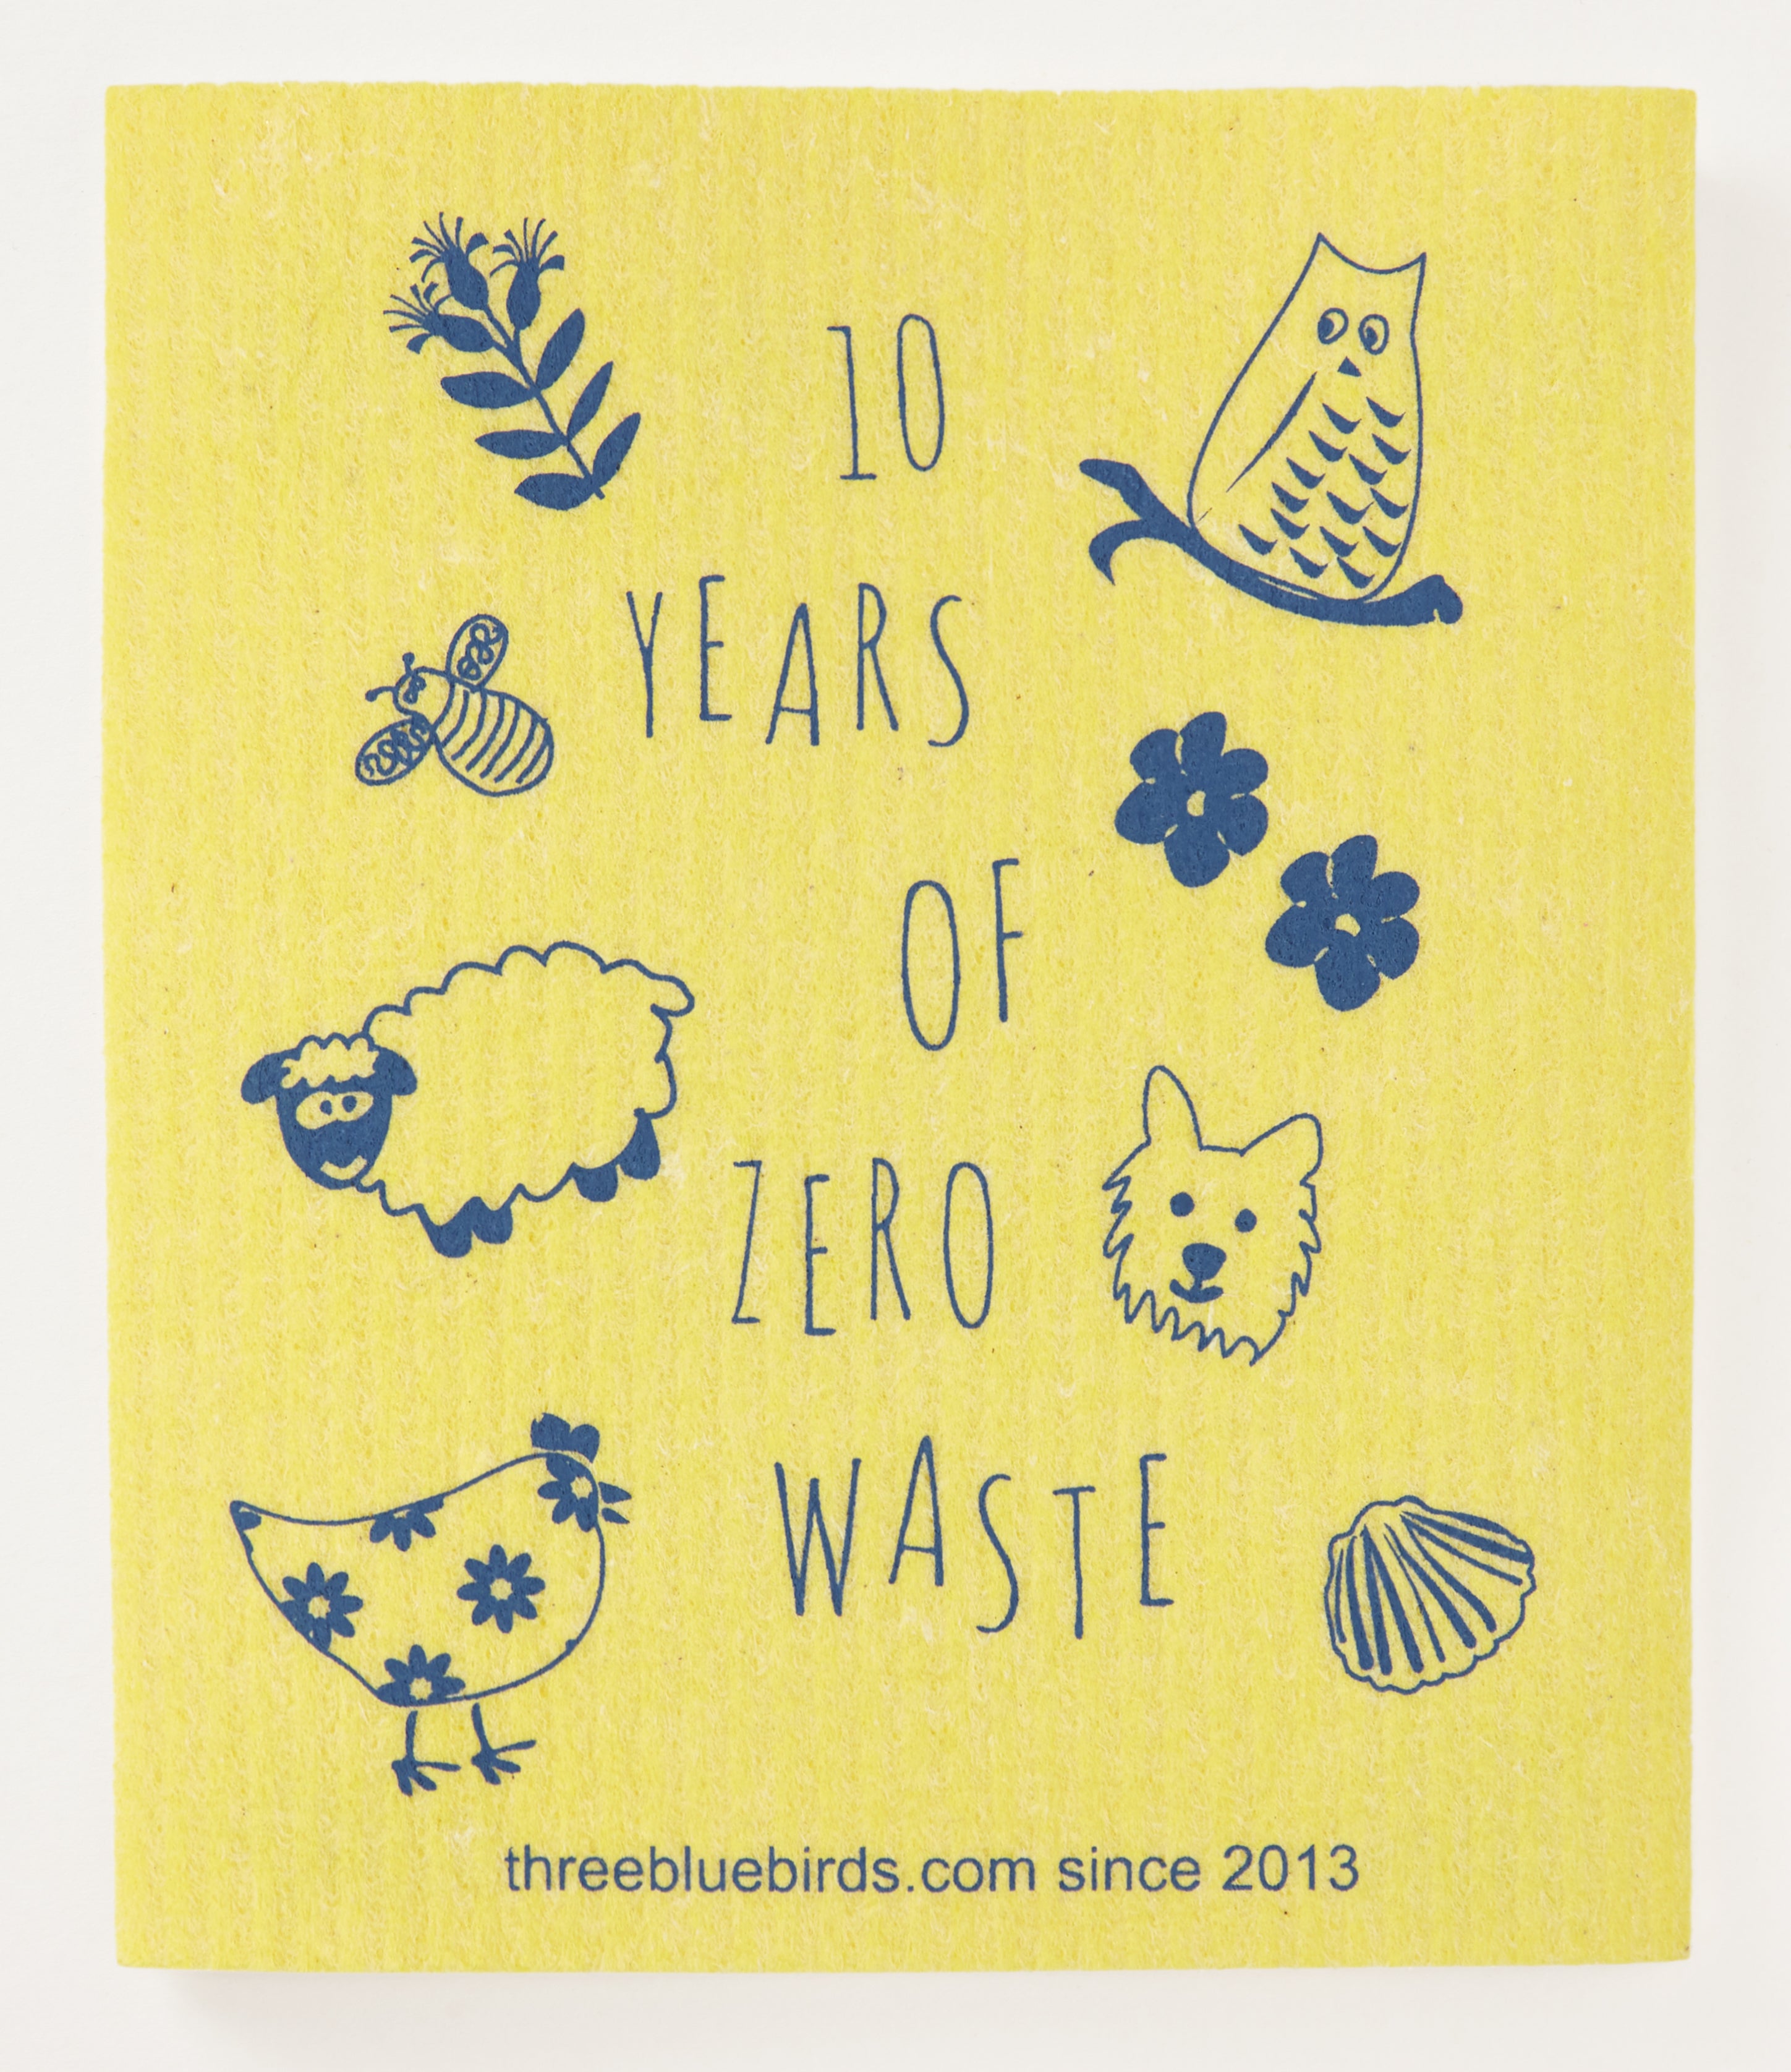 100% Organic Cotton Dishcloths, Zero Waste